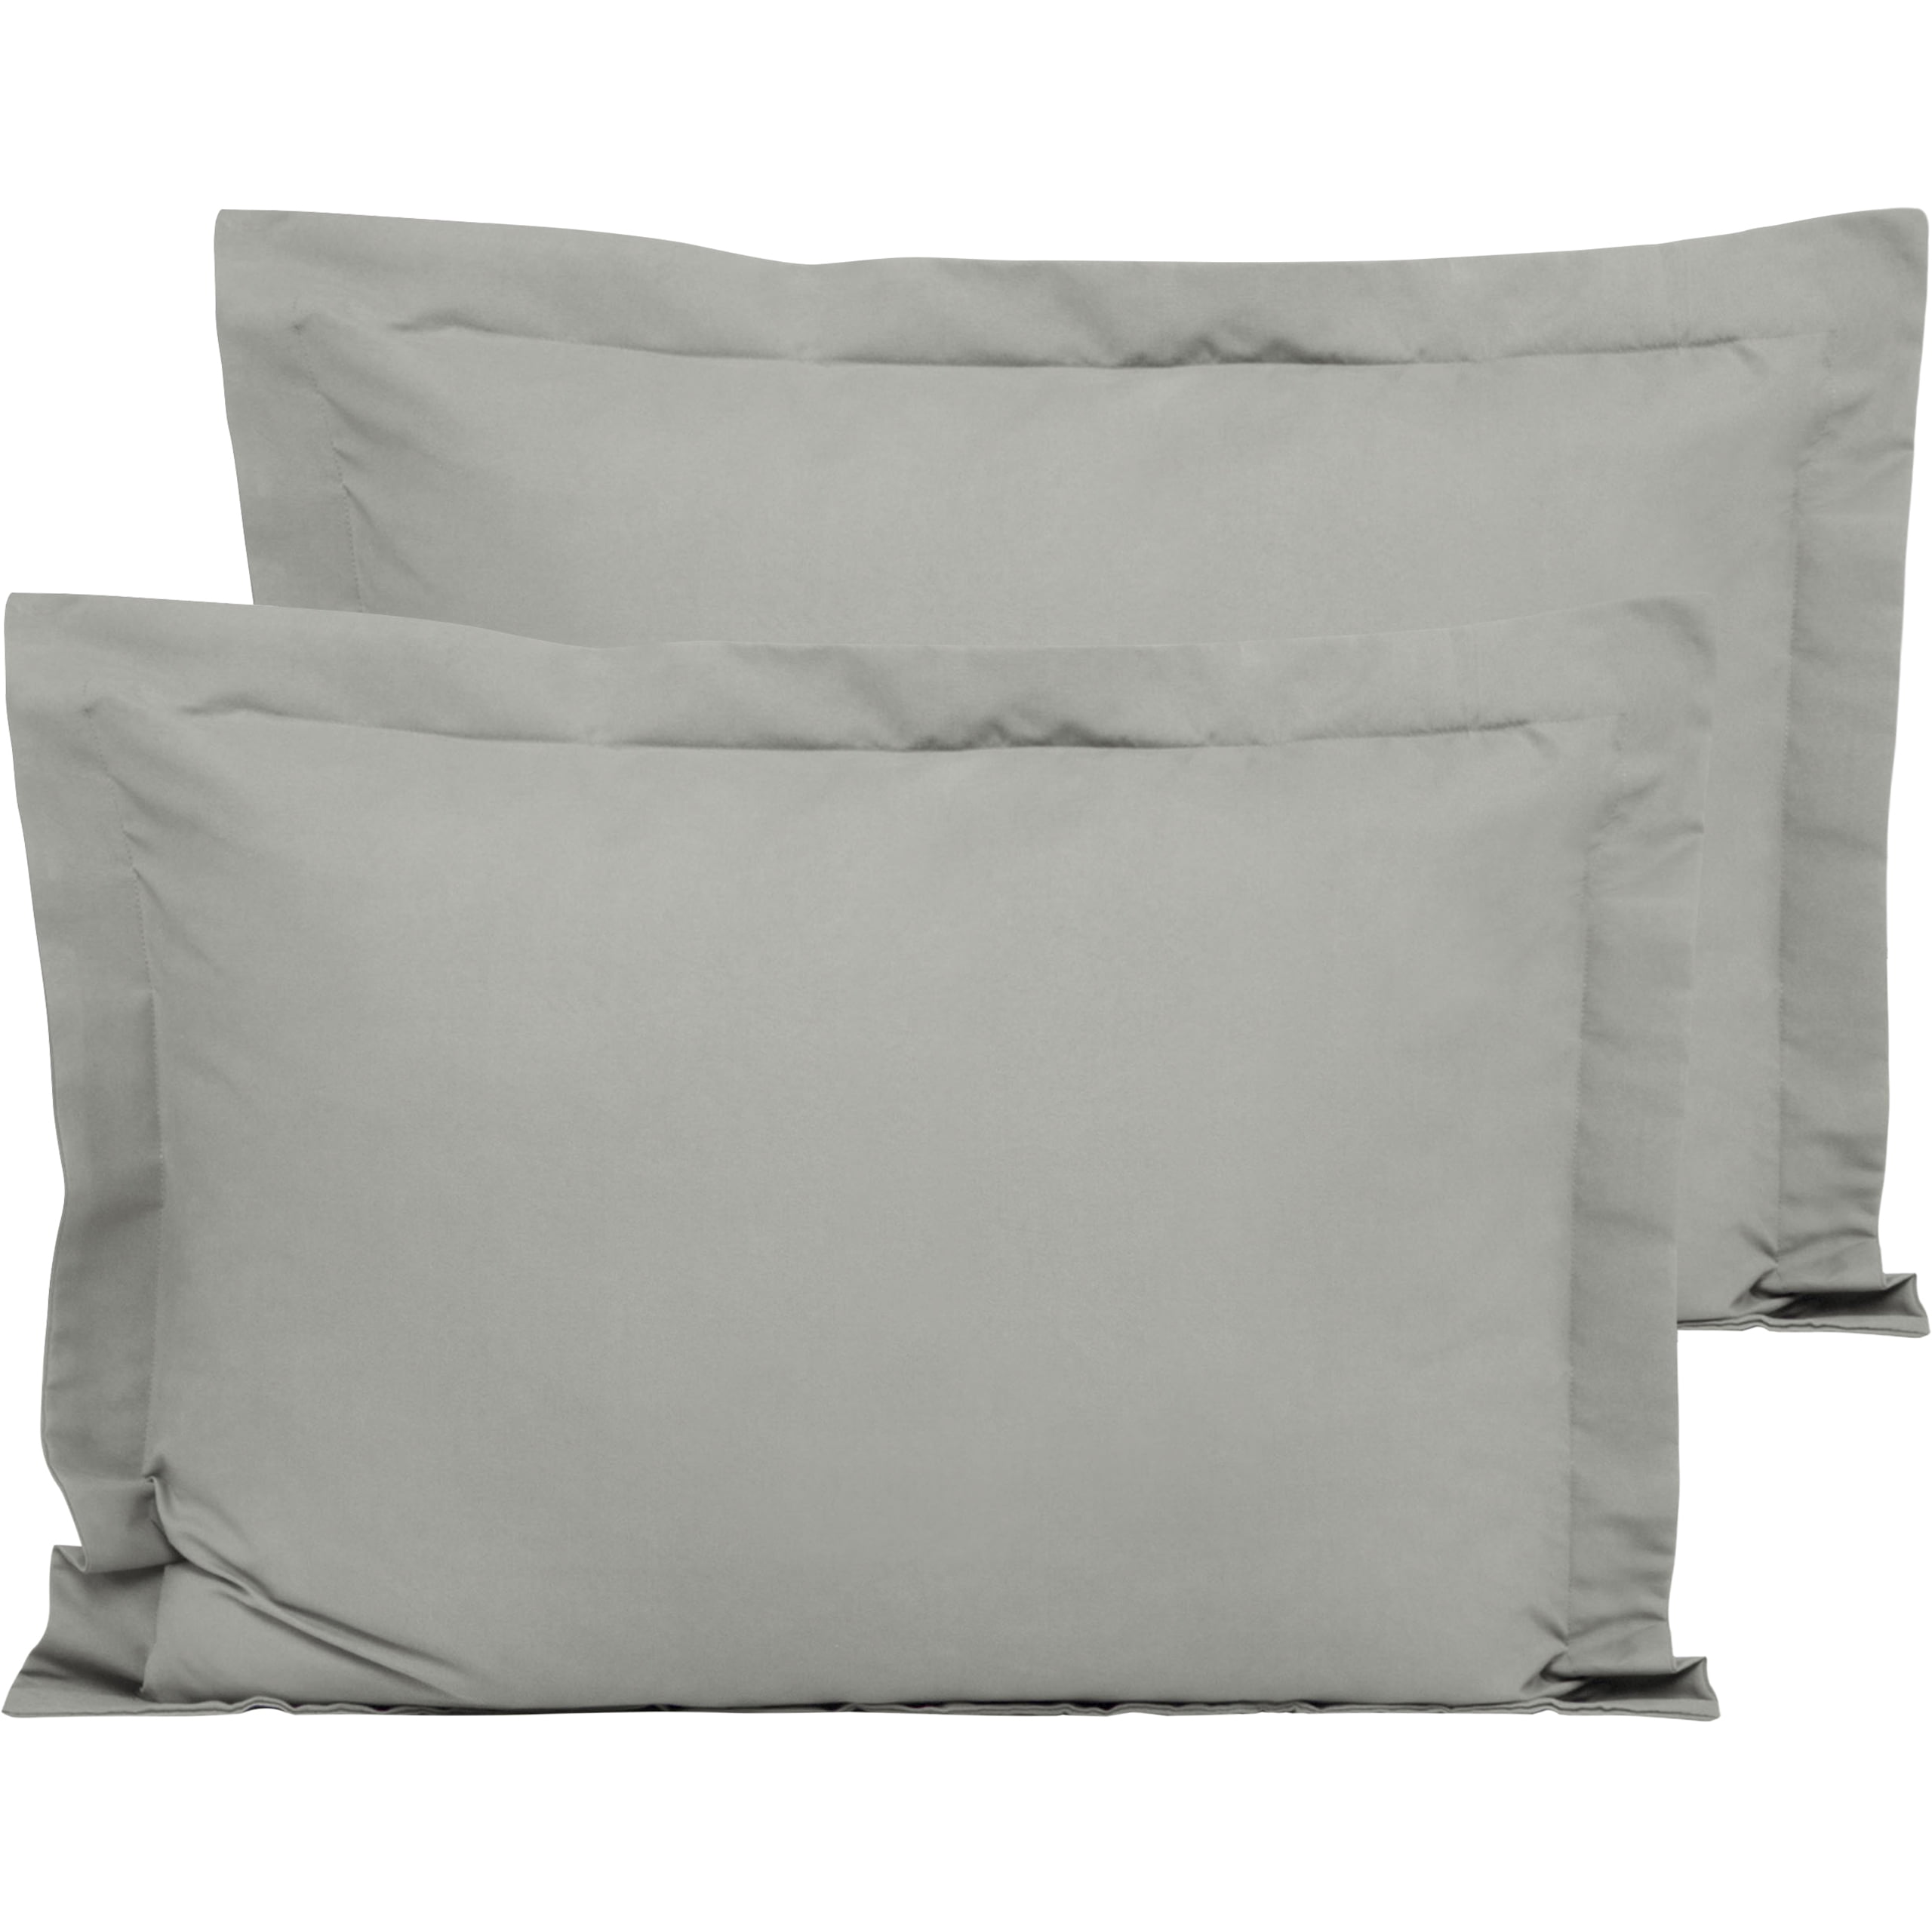 FLXXIE 2 Pack Microfiber Pillow Shams 20 x 26 Orange, Standard Ultra Soft and Premium Quality 